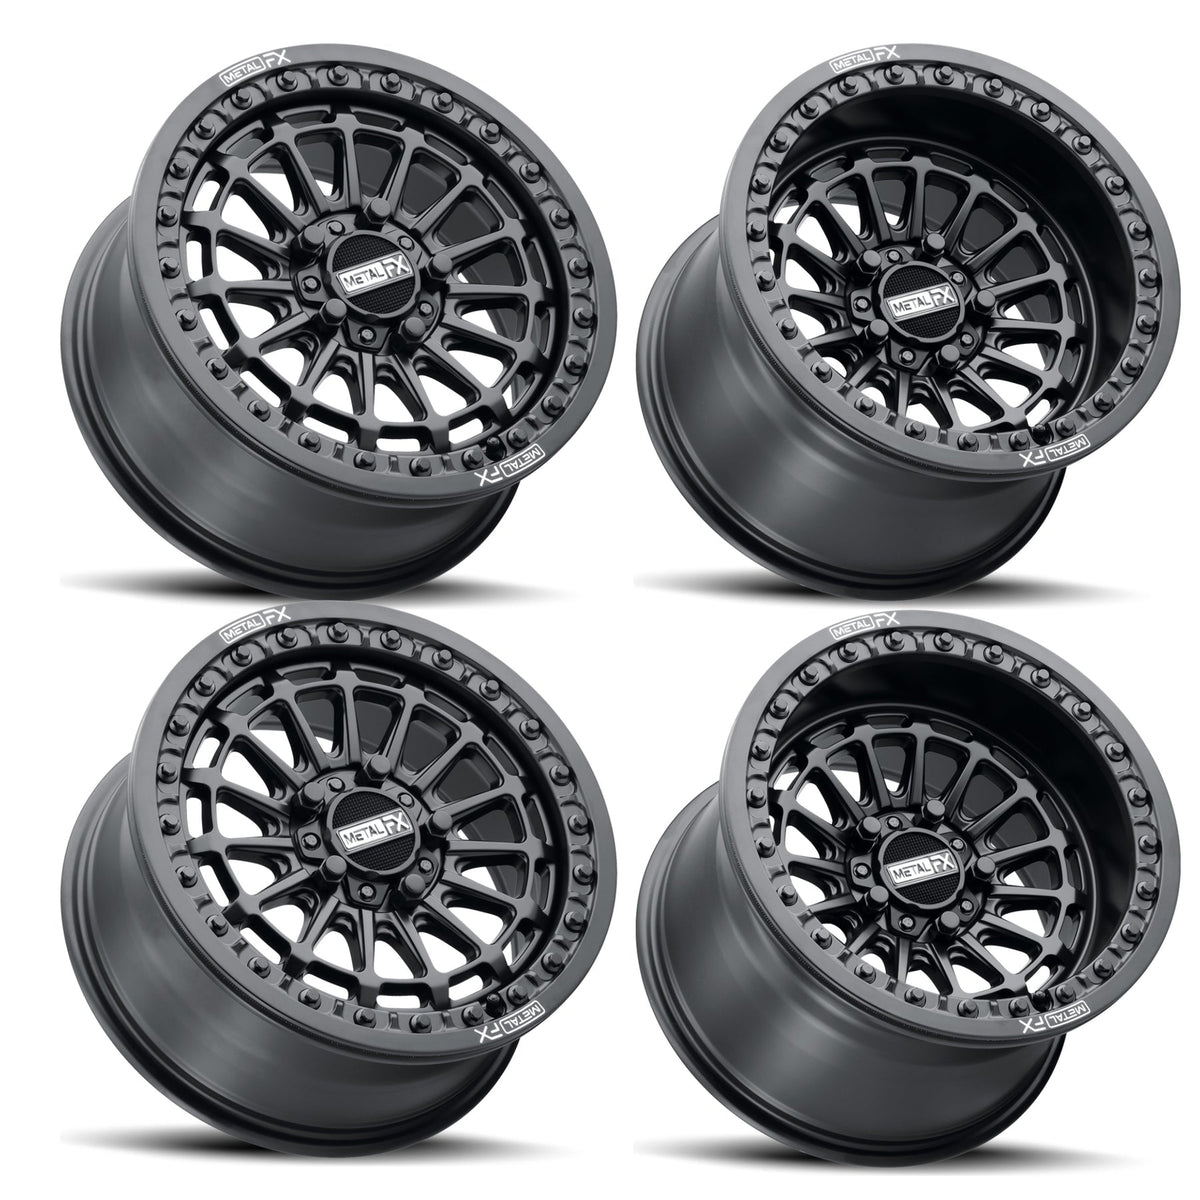 DELTA R BEADLOCK | SATIN BLACK | UTV WHEEL KIT-Wheels-Metal FX Offroad-5x4.5 (5x114.3) | Polaris Pro R / Turbo R / Xpedition-Dirt/Street - 15x7 (5+2) - (All 4)-No Spare-Black Market UTV